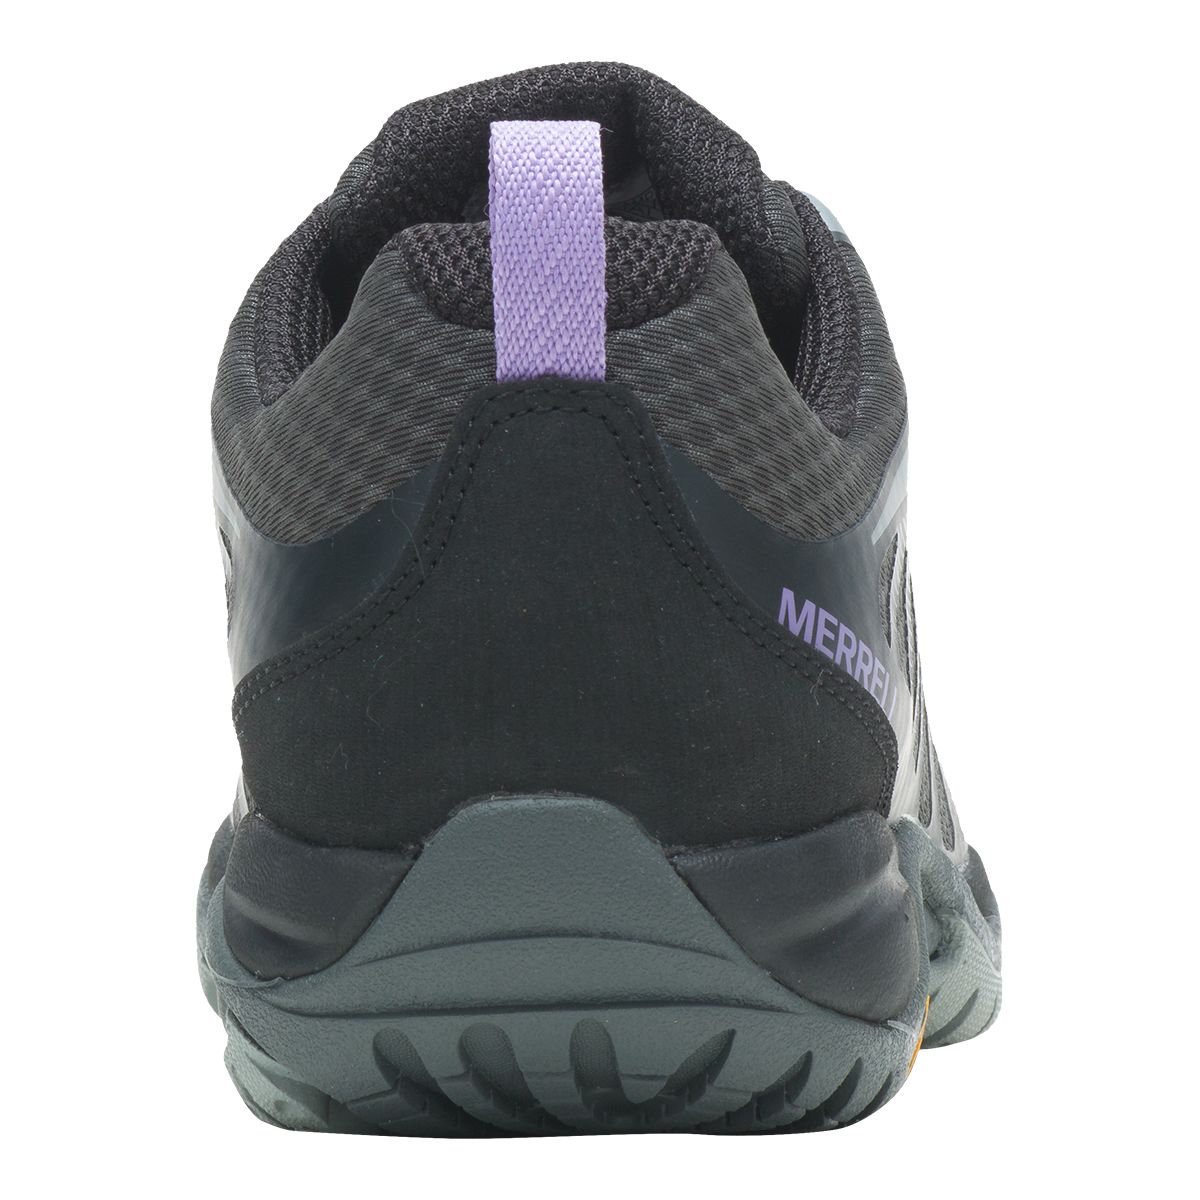 Merrell Women's Siren Edge 3 Waterproof Hiking Shoes